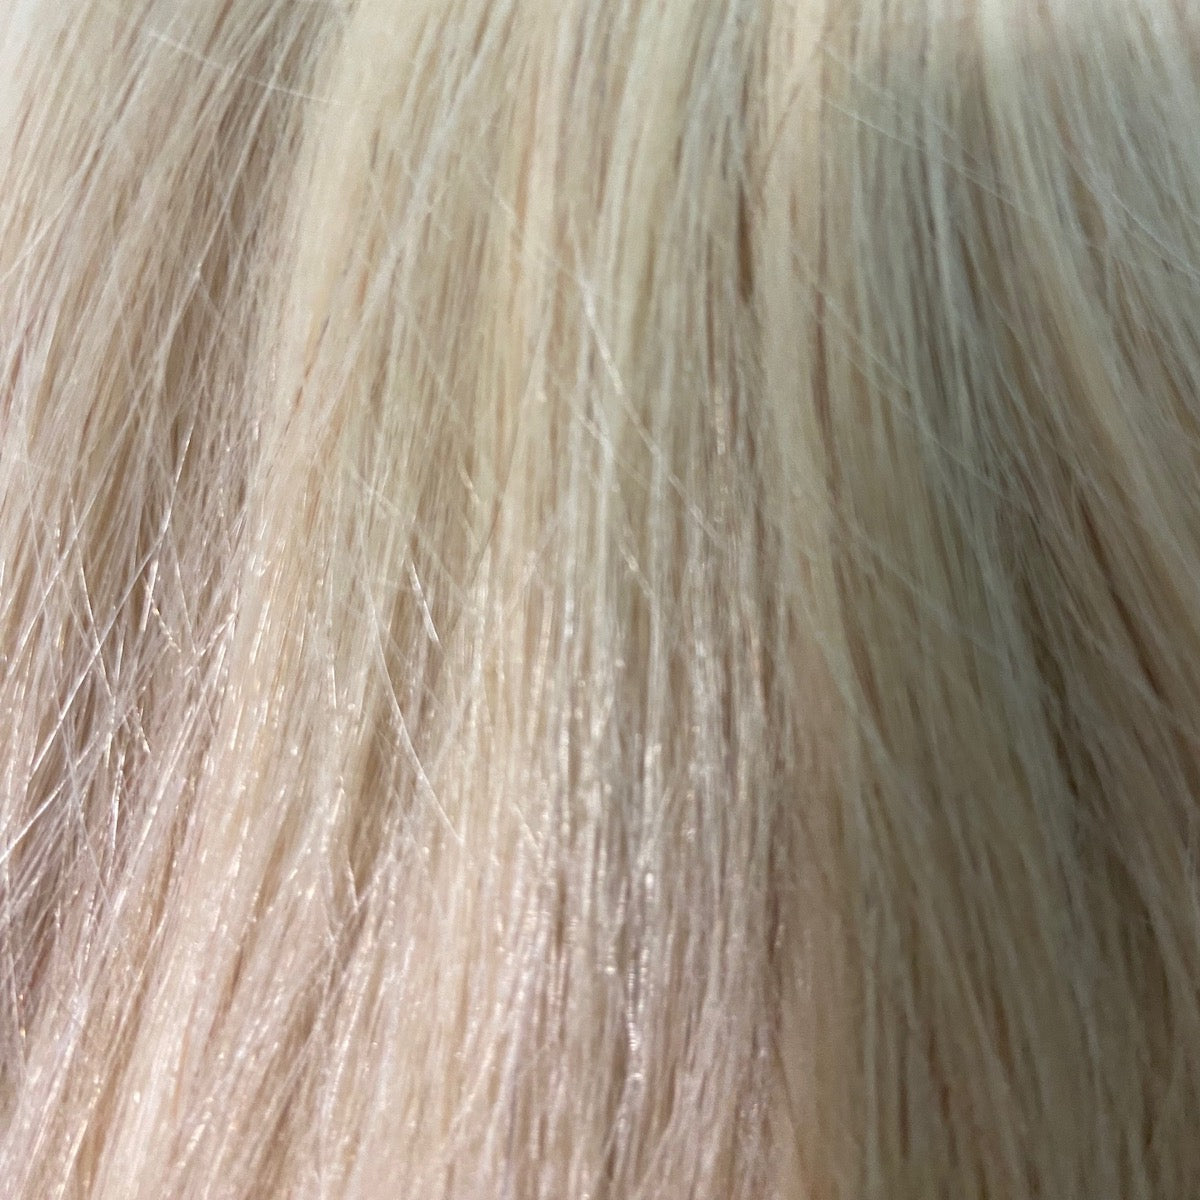 I-Tip 22" 25g Professional Hair Extensions - #19 Desert Blonde